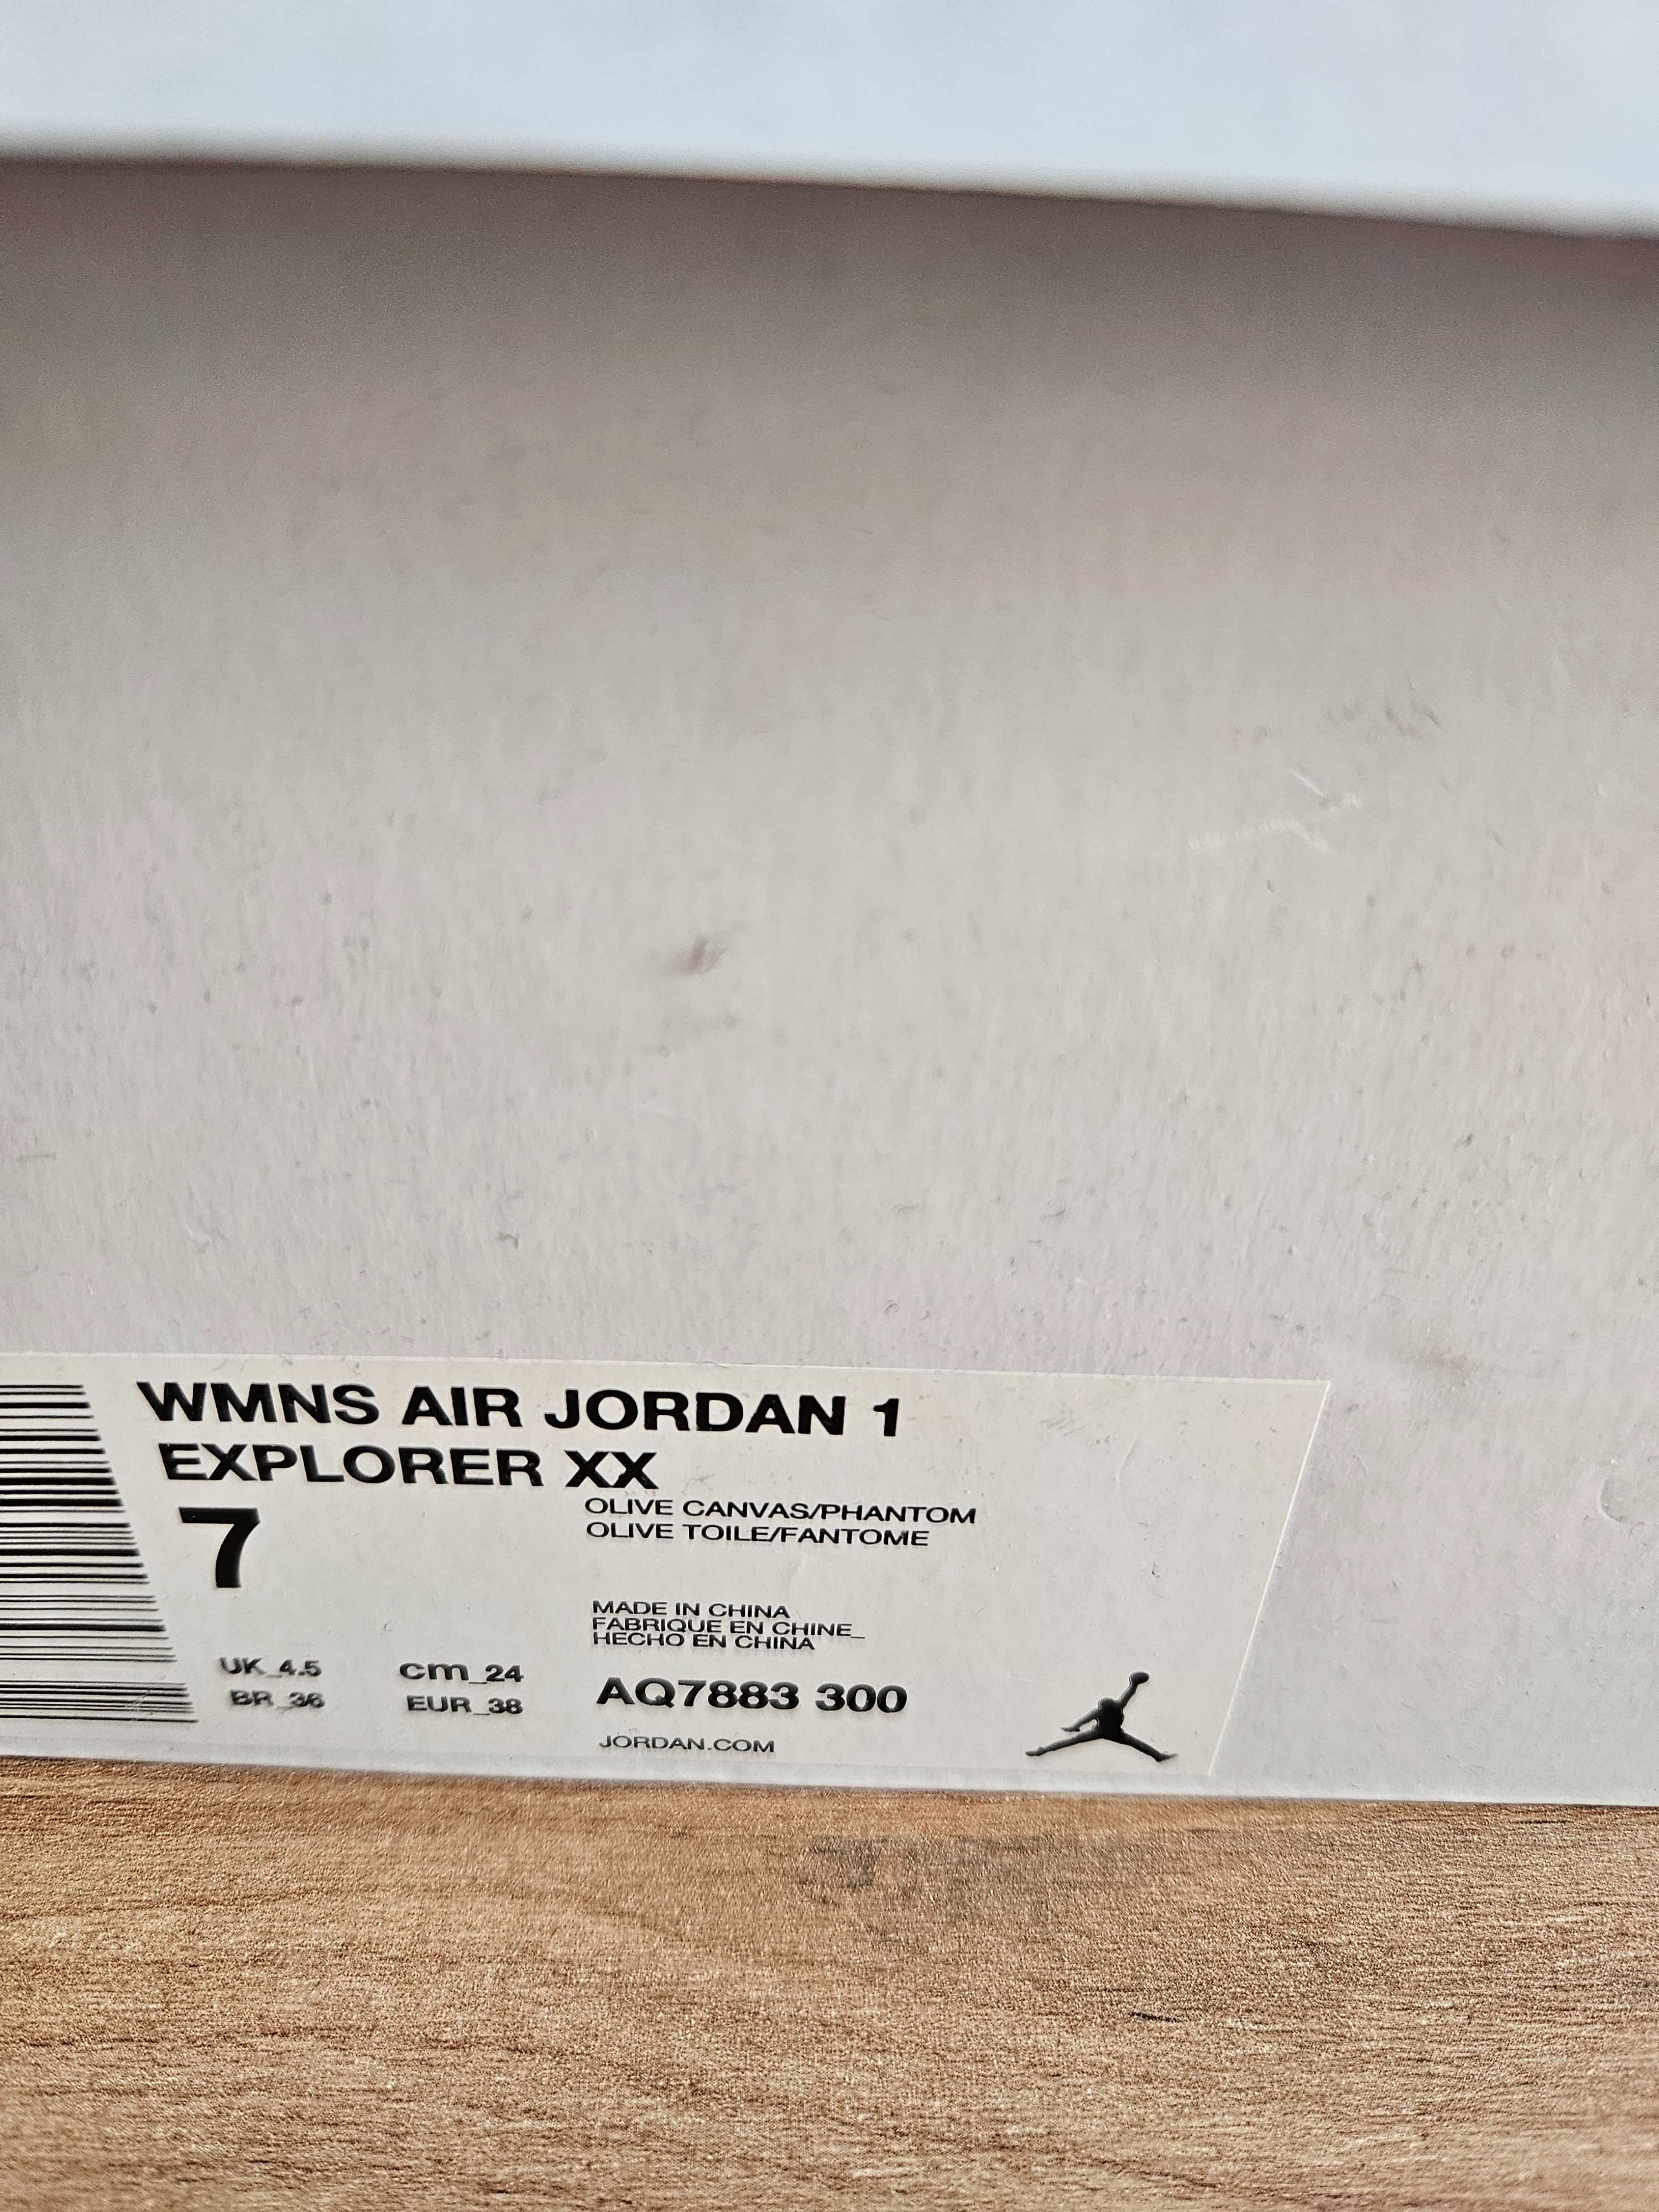 Buty Air Jordan 1 explorer xx Nike